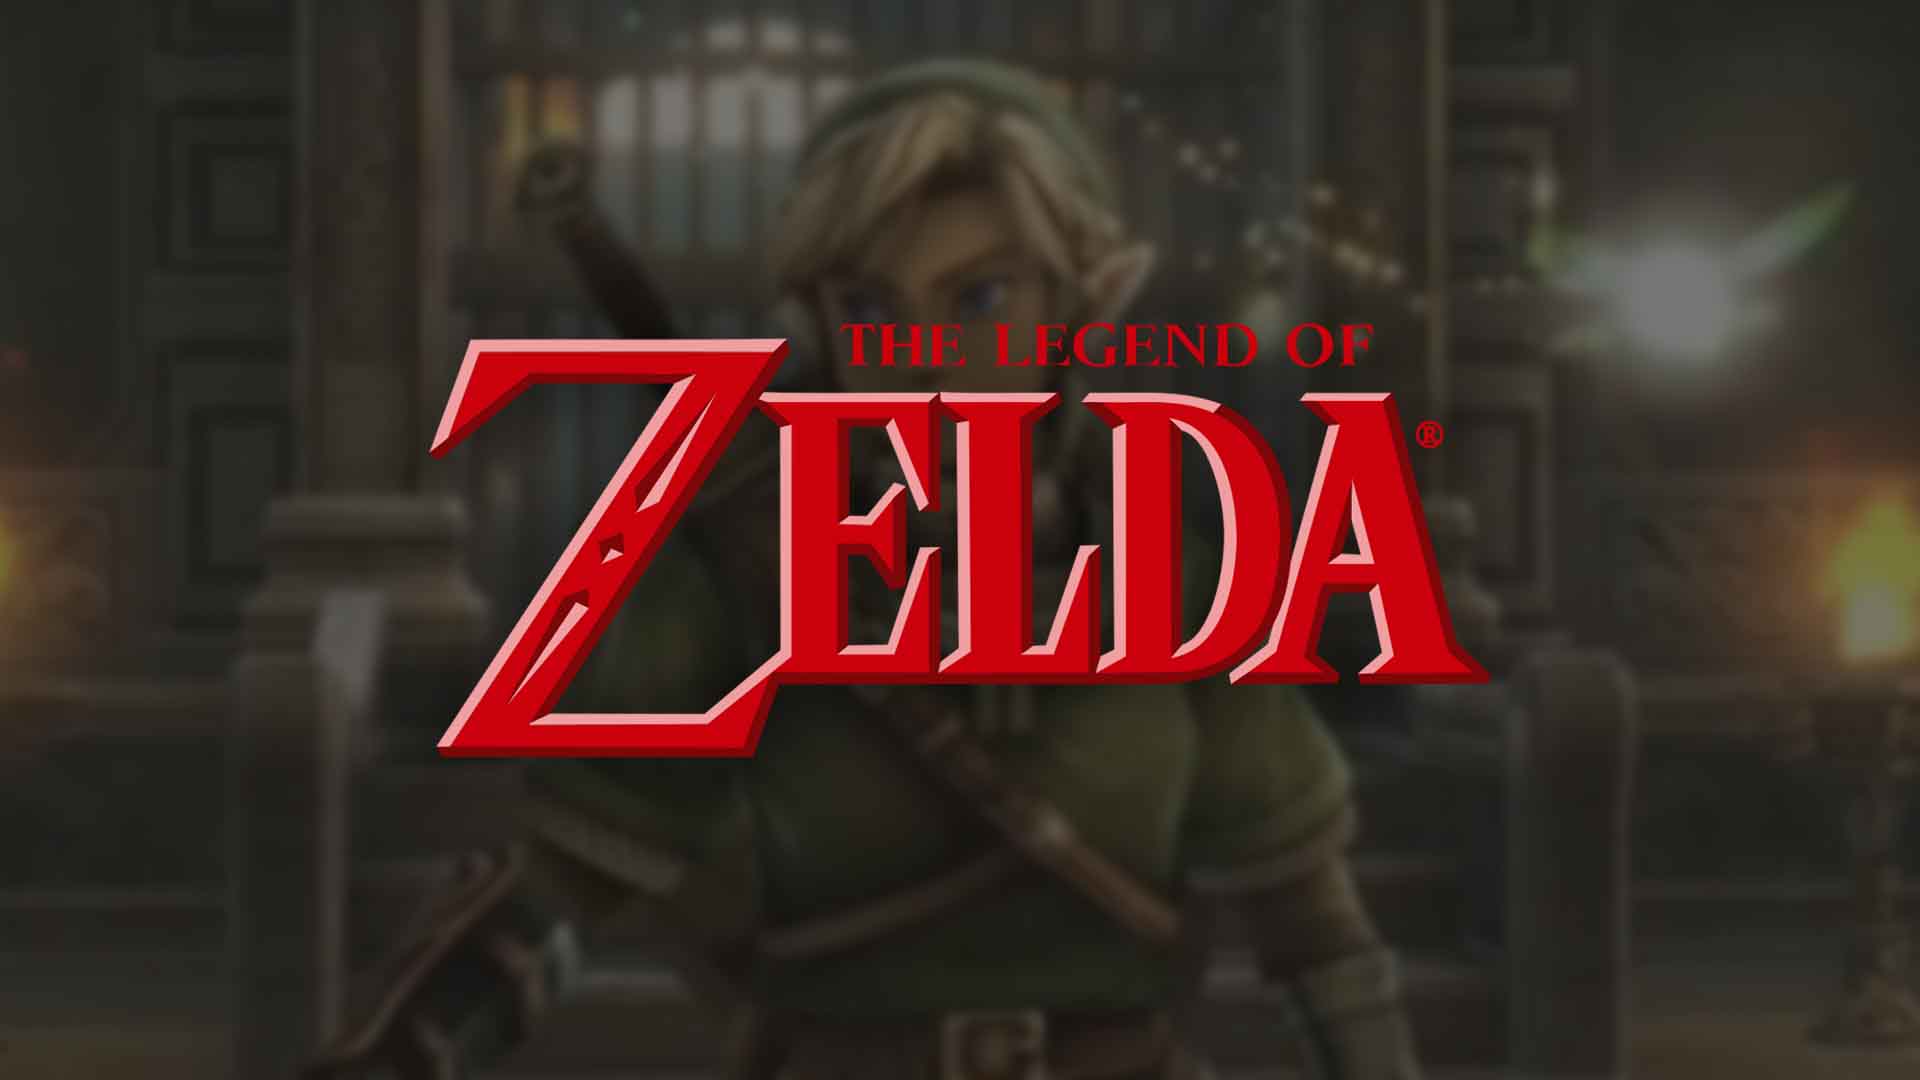 Nintendo announces live-action The Legend of Zelda movie – Nintendo Wire